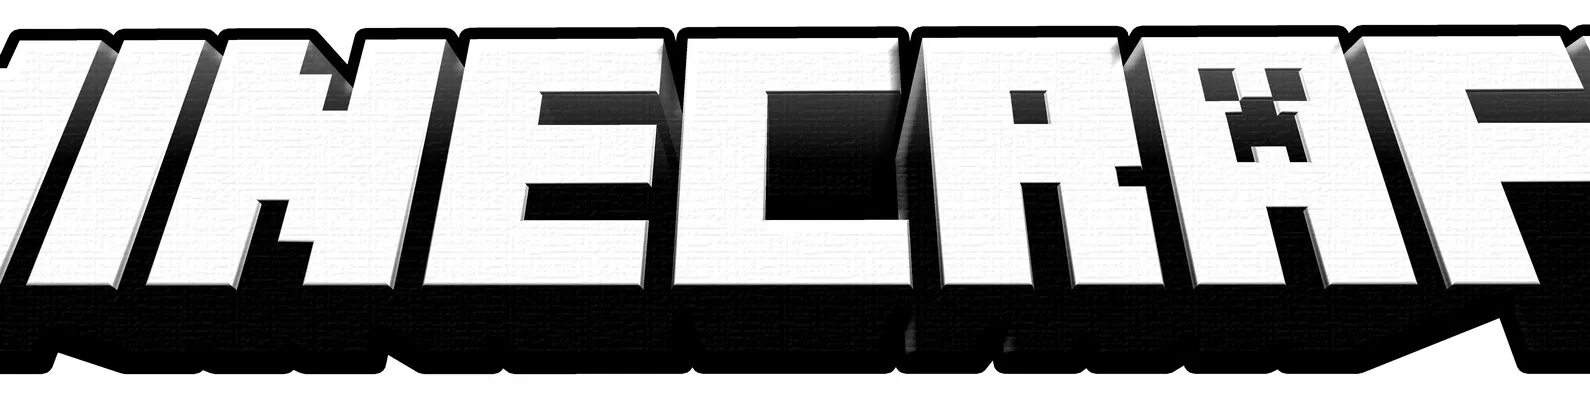 Minecraft logo png. Майнкрафт логотип. Майнкрафт надпись. Minecraft надпись без фона. Логотип майнкрафт на прозрачном фоне.